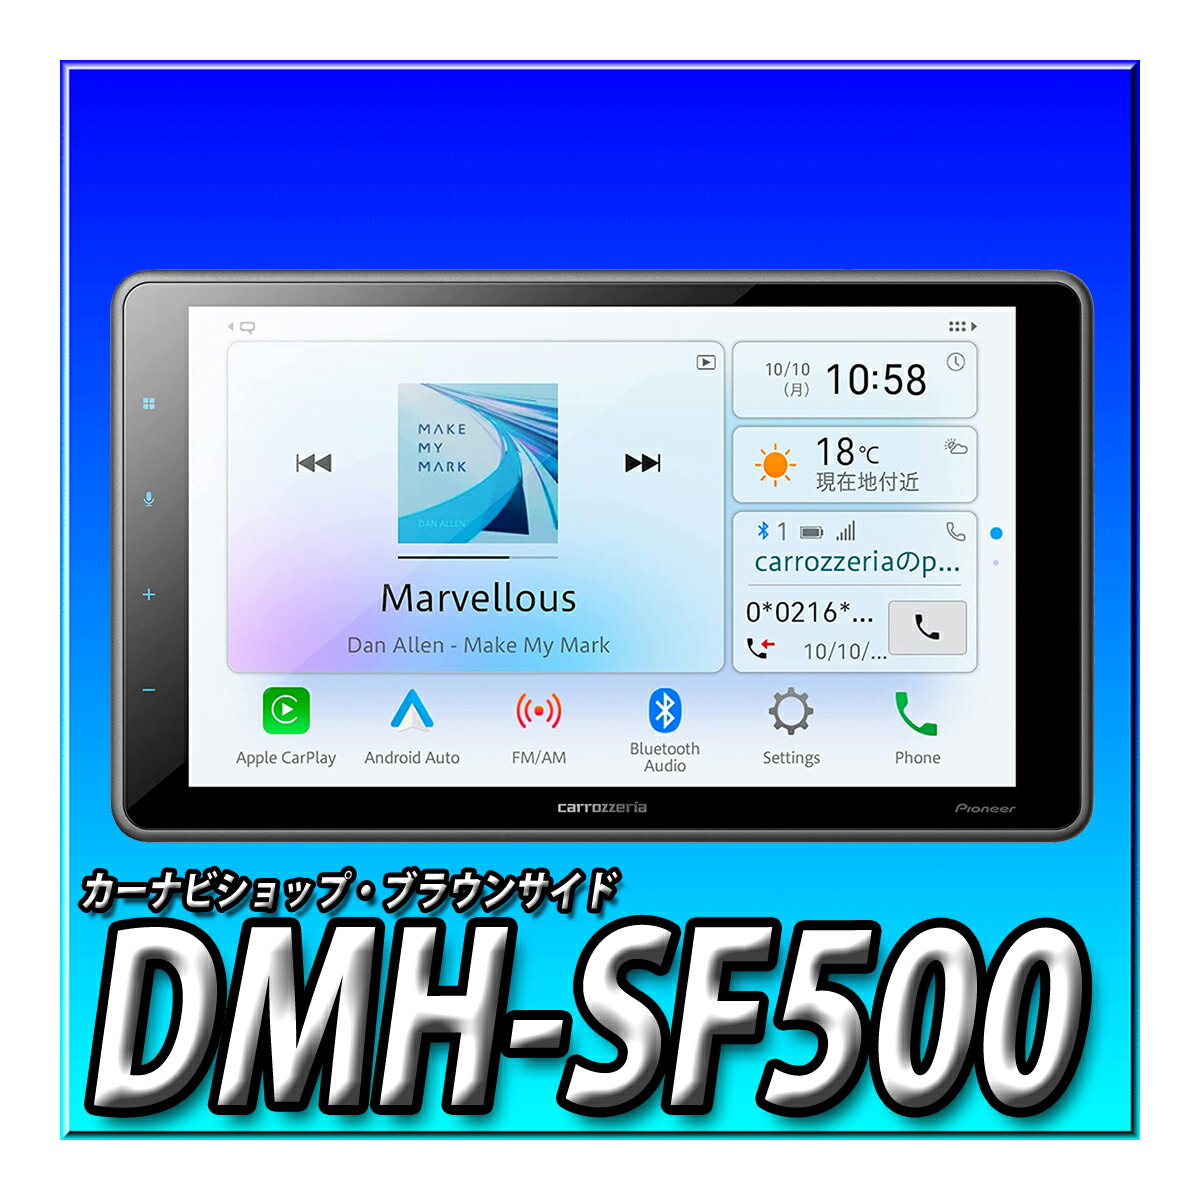 DMH-SF500 9C` t[eBO 1DIN AppleCarPlay AndroidAuto?Ή Bluetooth JbcFA@Pioneer pCIjA fBXvCI[fBI